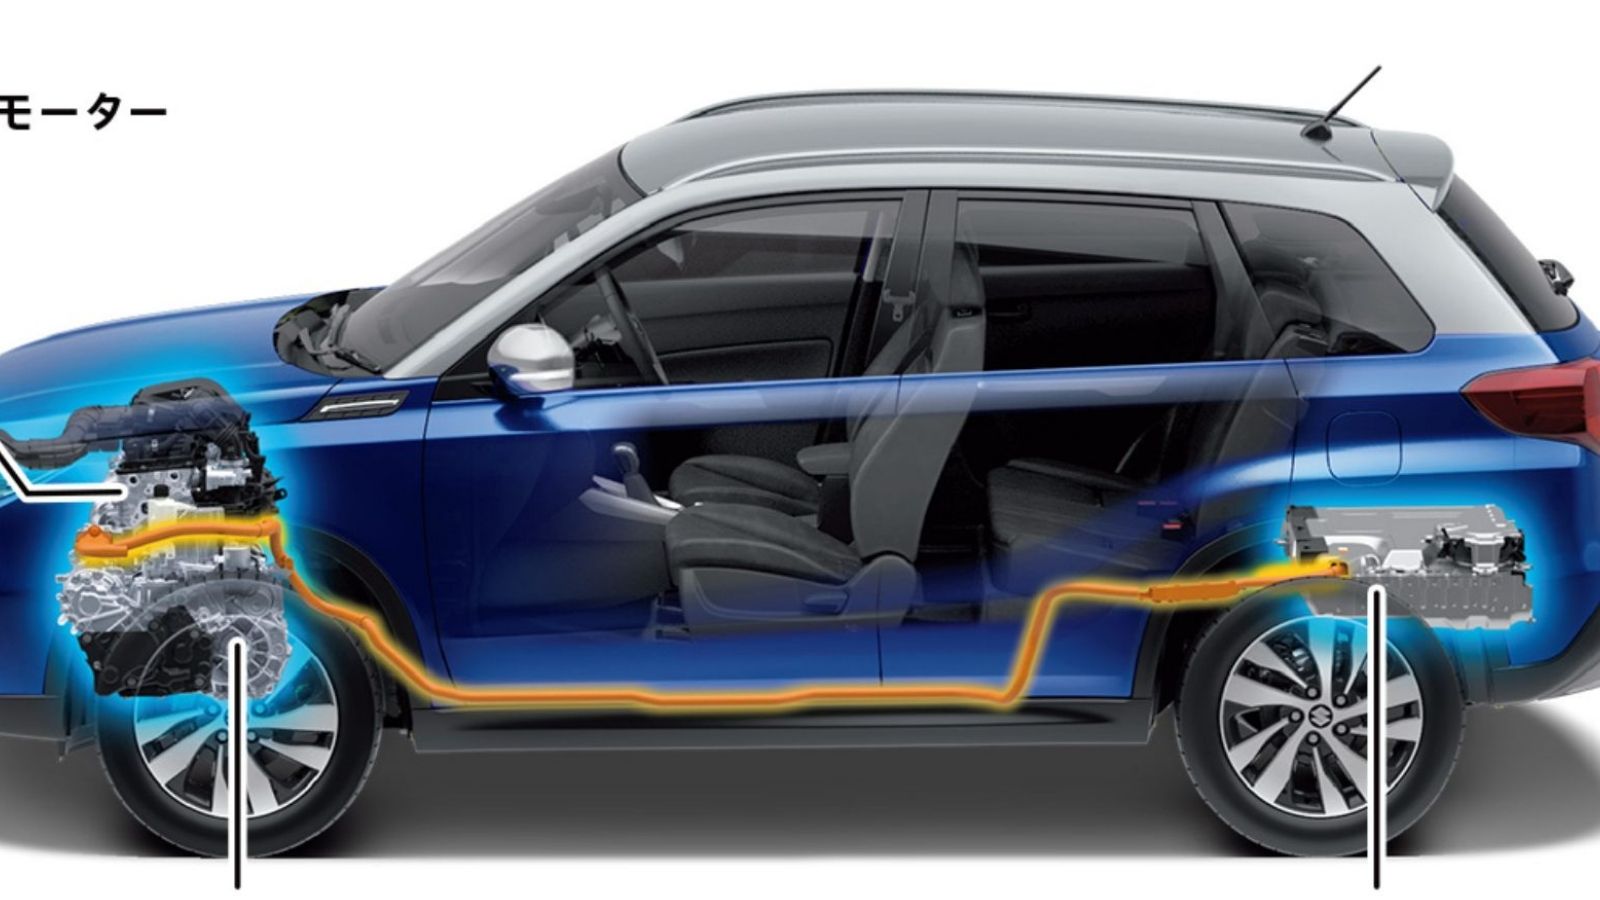 Car Upcoming Launches: হাইব্রিড সেগমেন্টে চমক, আসছে মারুতি-টয়োটার জোড়া মডেল